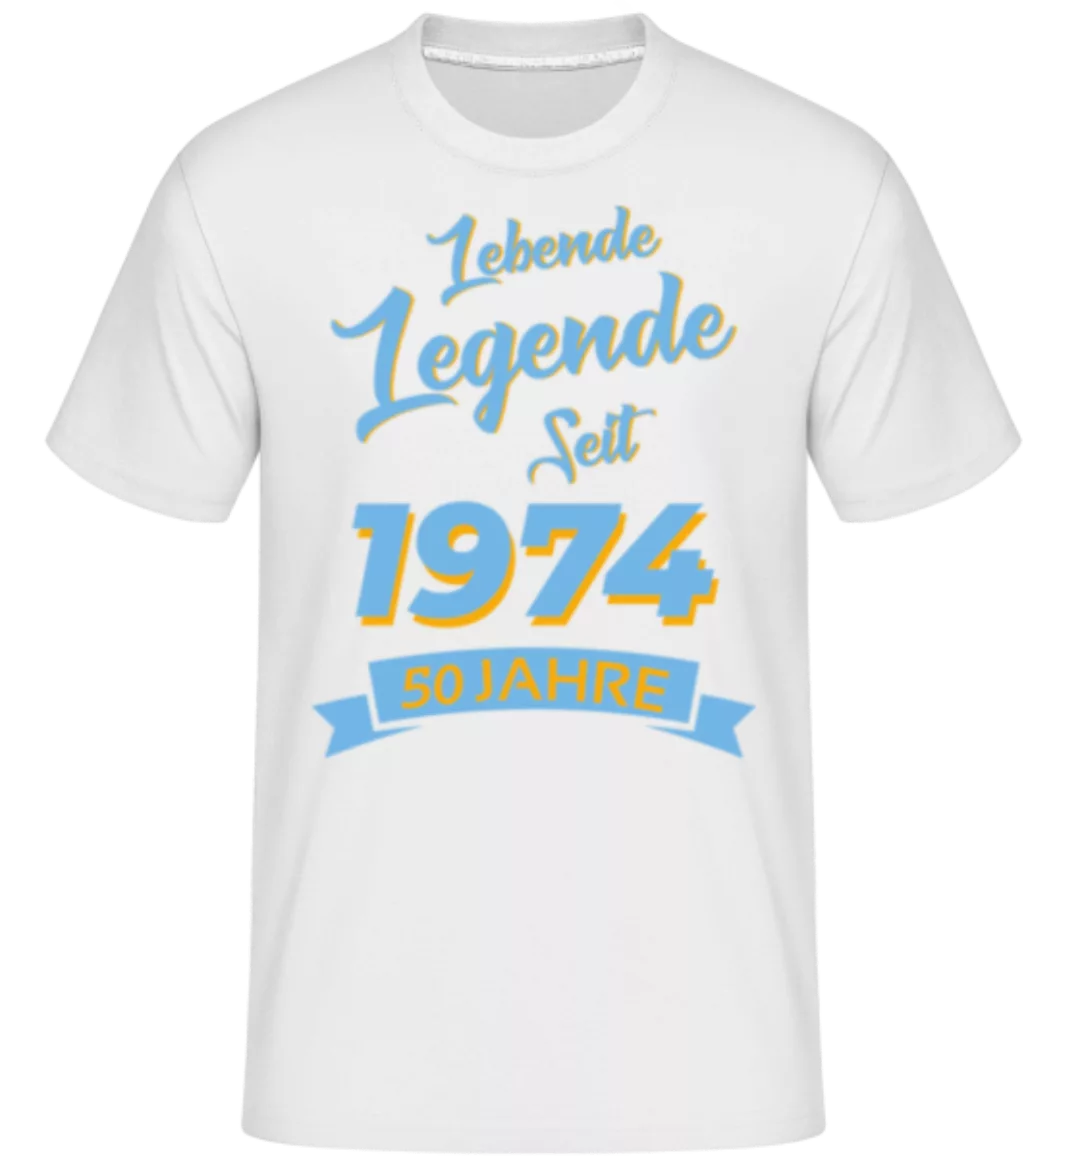 50 Lebende Legende 1974 · Shirtinator Männer T-Shirt günstig online kaufen